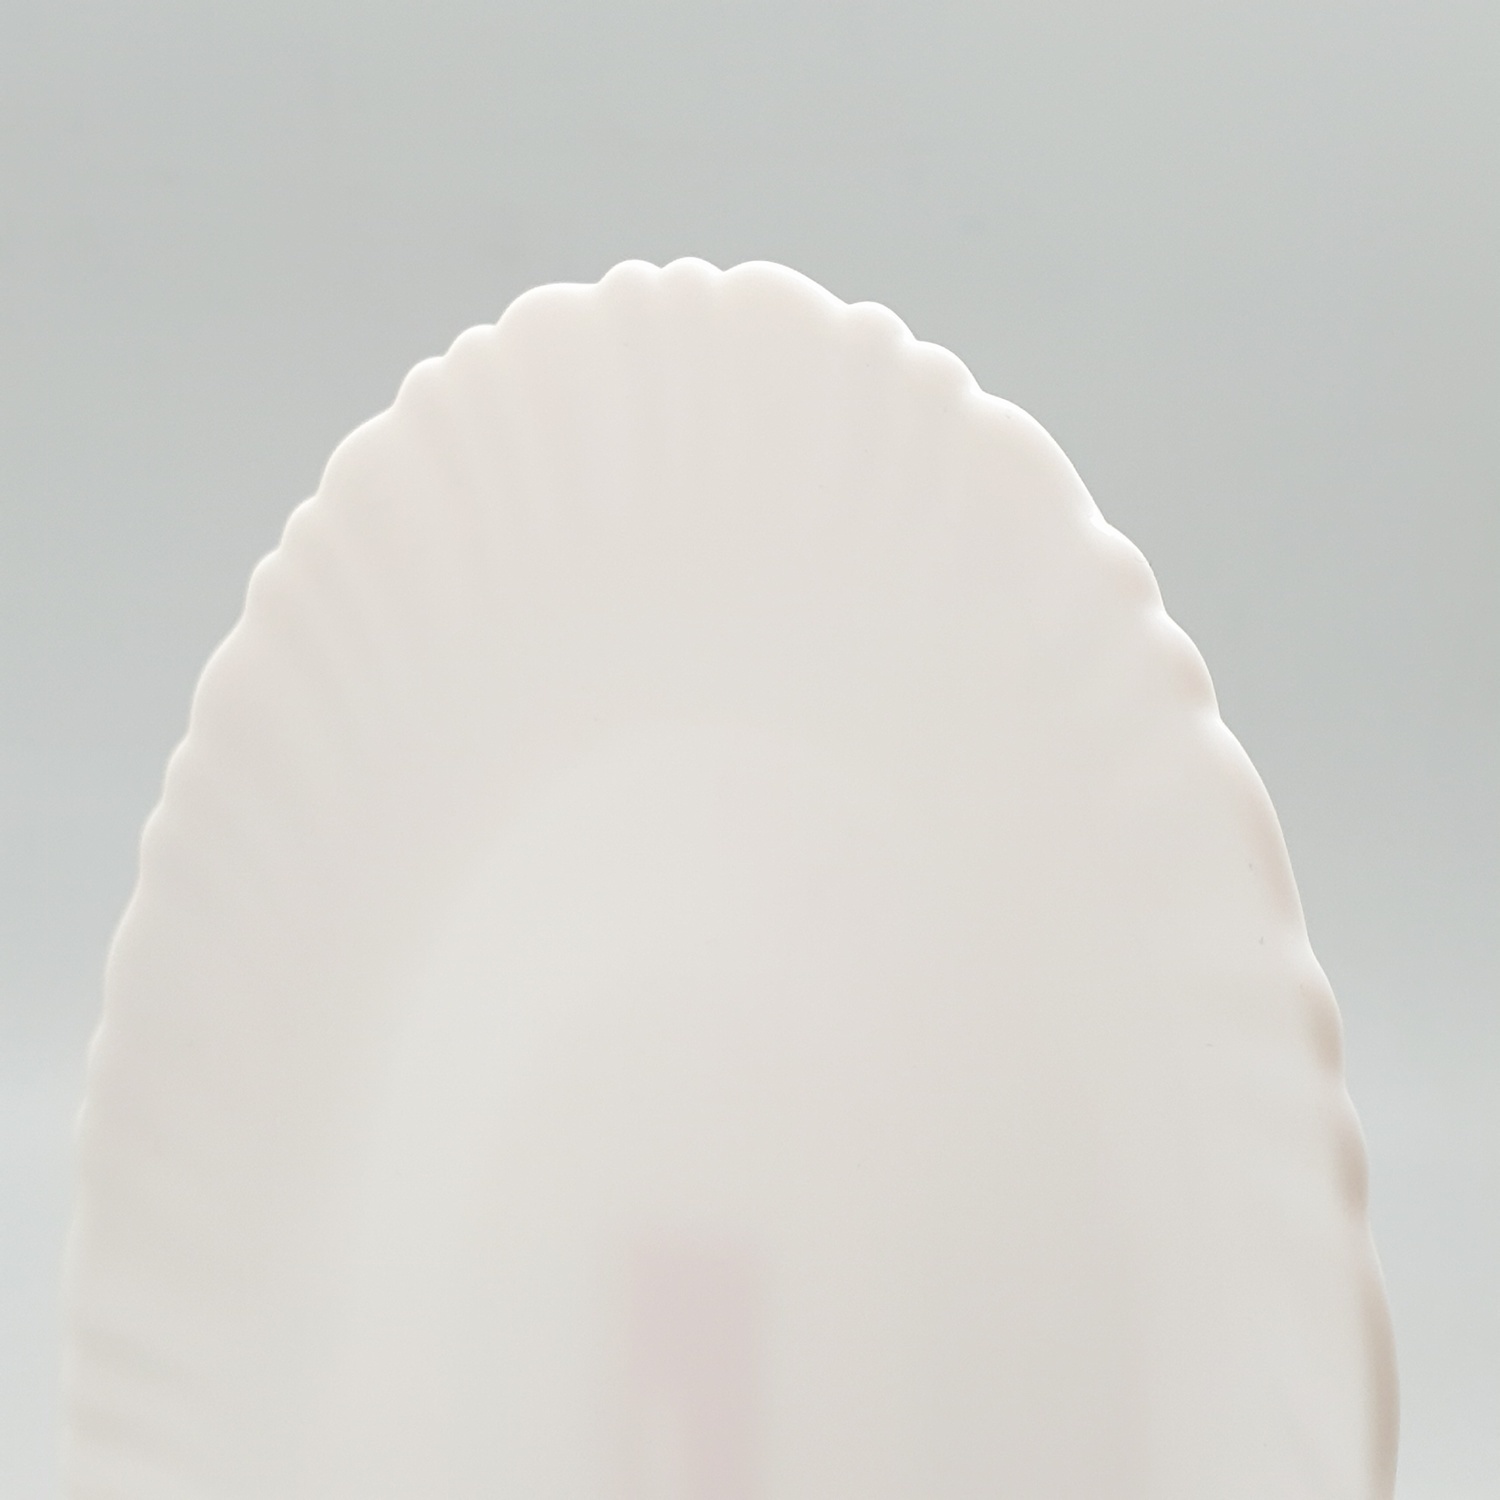 ADAMAS จานโอปอลขอบริ้ว 7.5 นิ้ว HBTP75-H0 สีขาว